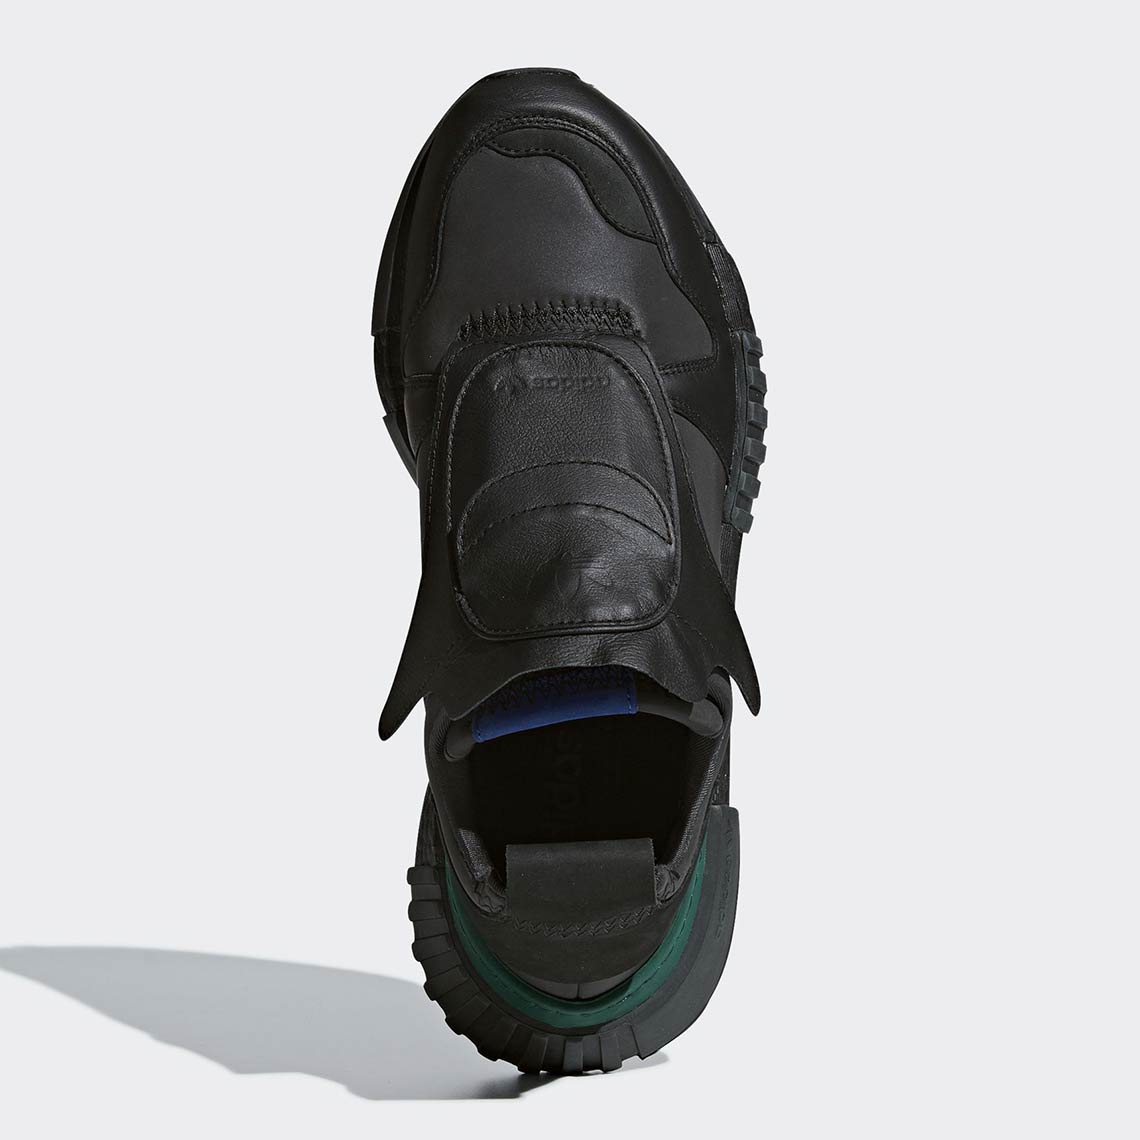 Adidas Futurepacer Black Green B37266 1